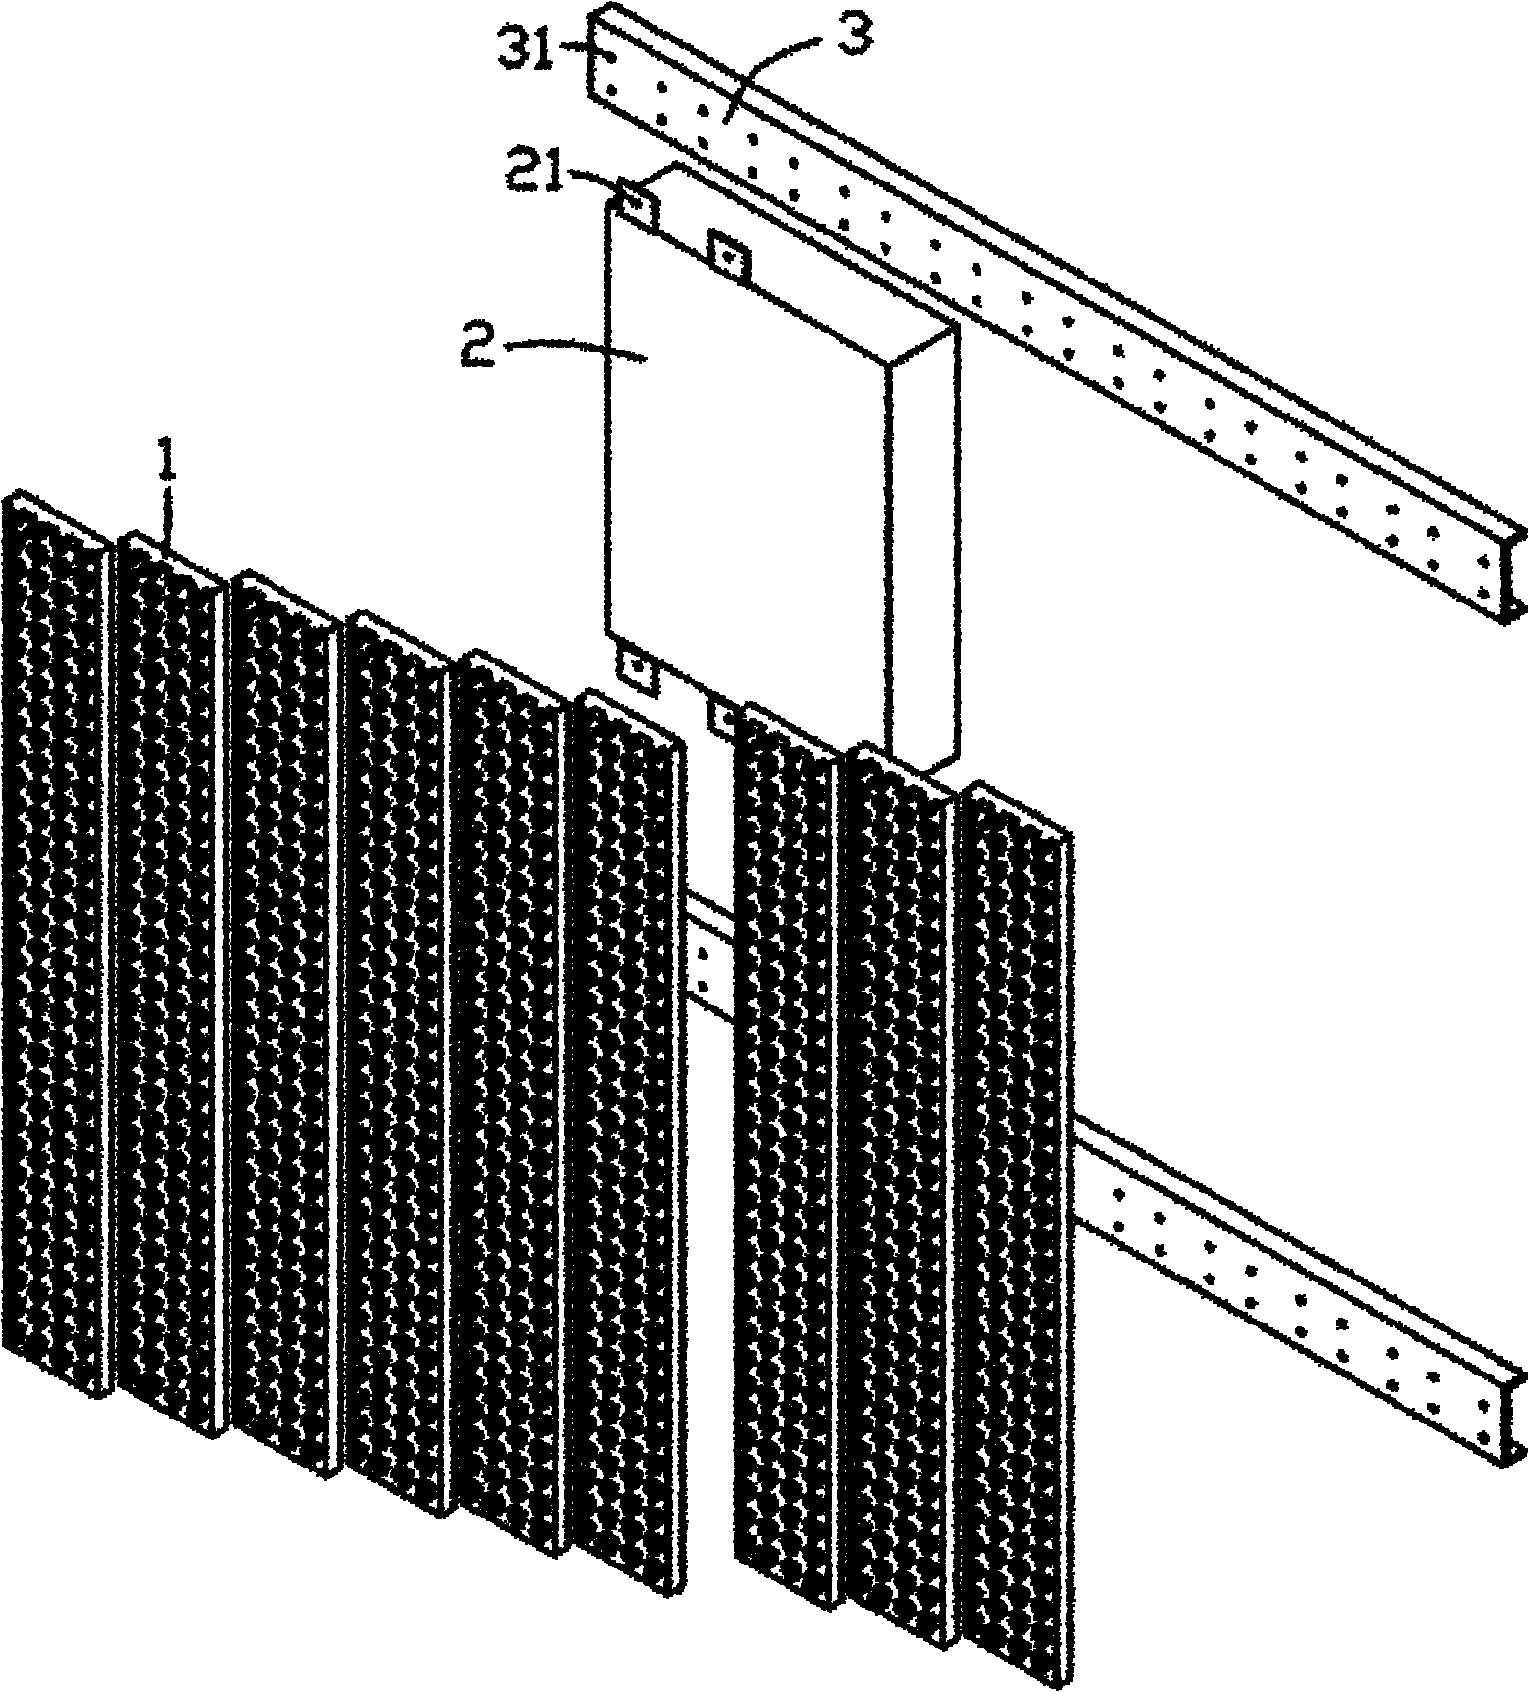 Light emitting diode (LED) assembled screen